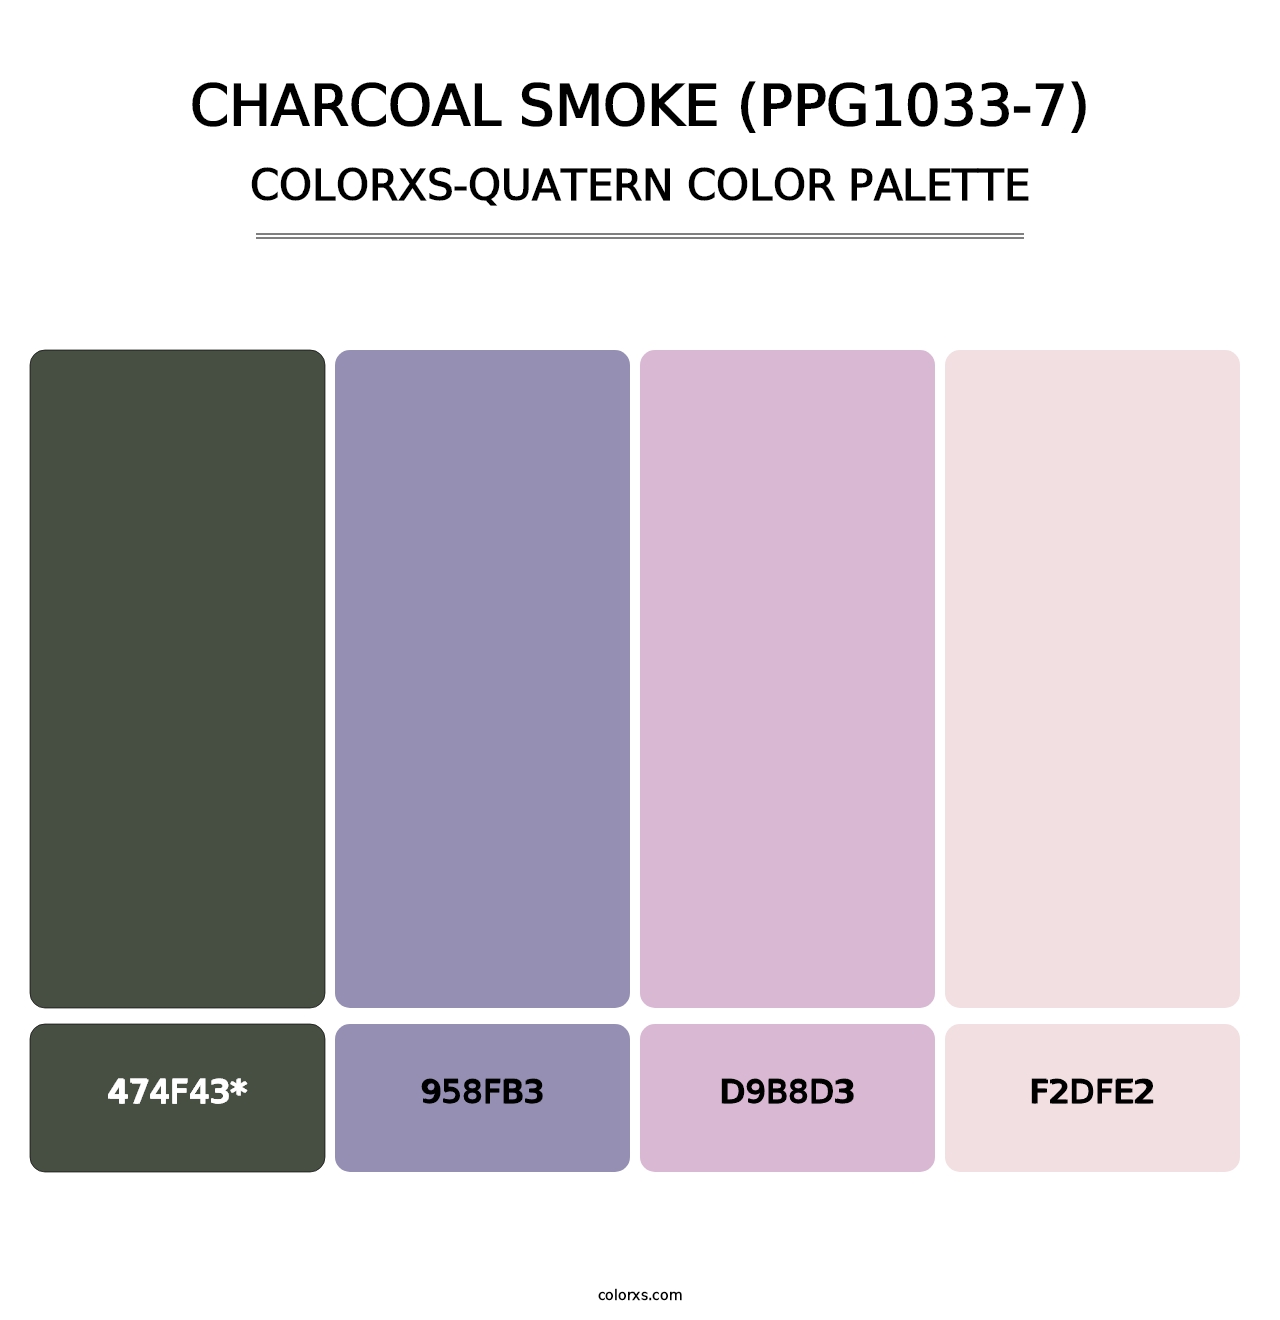 Charcoal Smoke (PPG1033-7) - Colorxs Quatern Palette